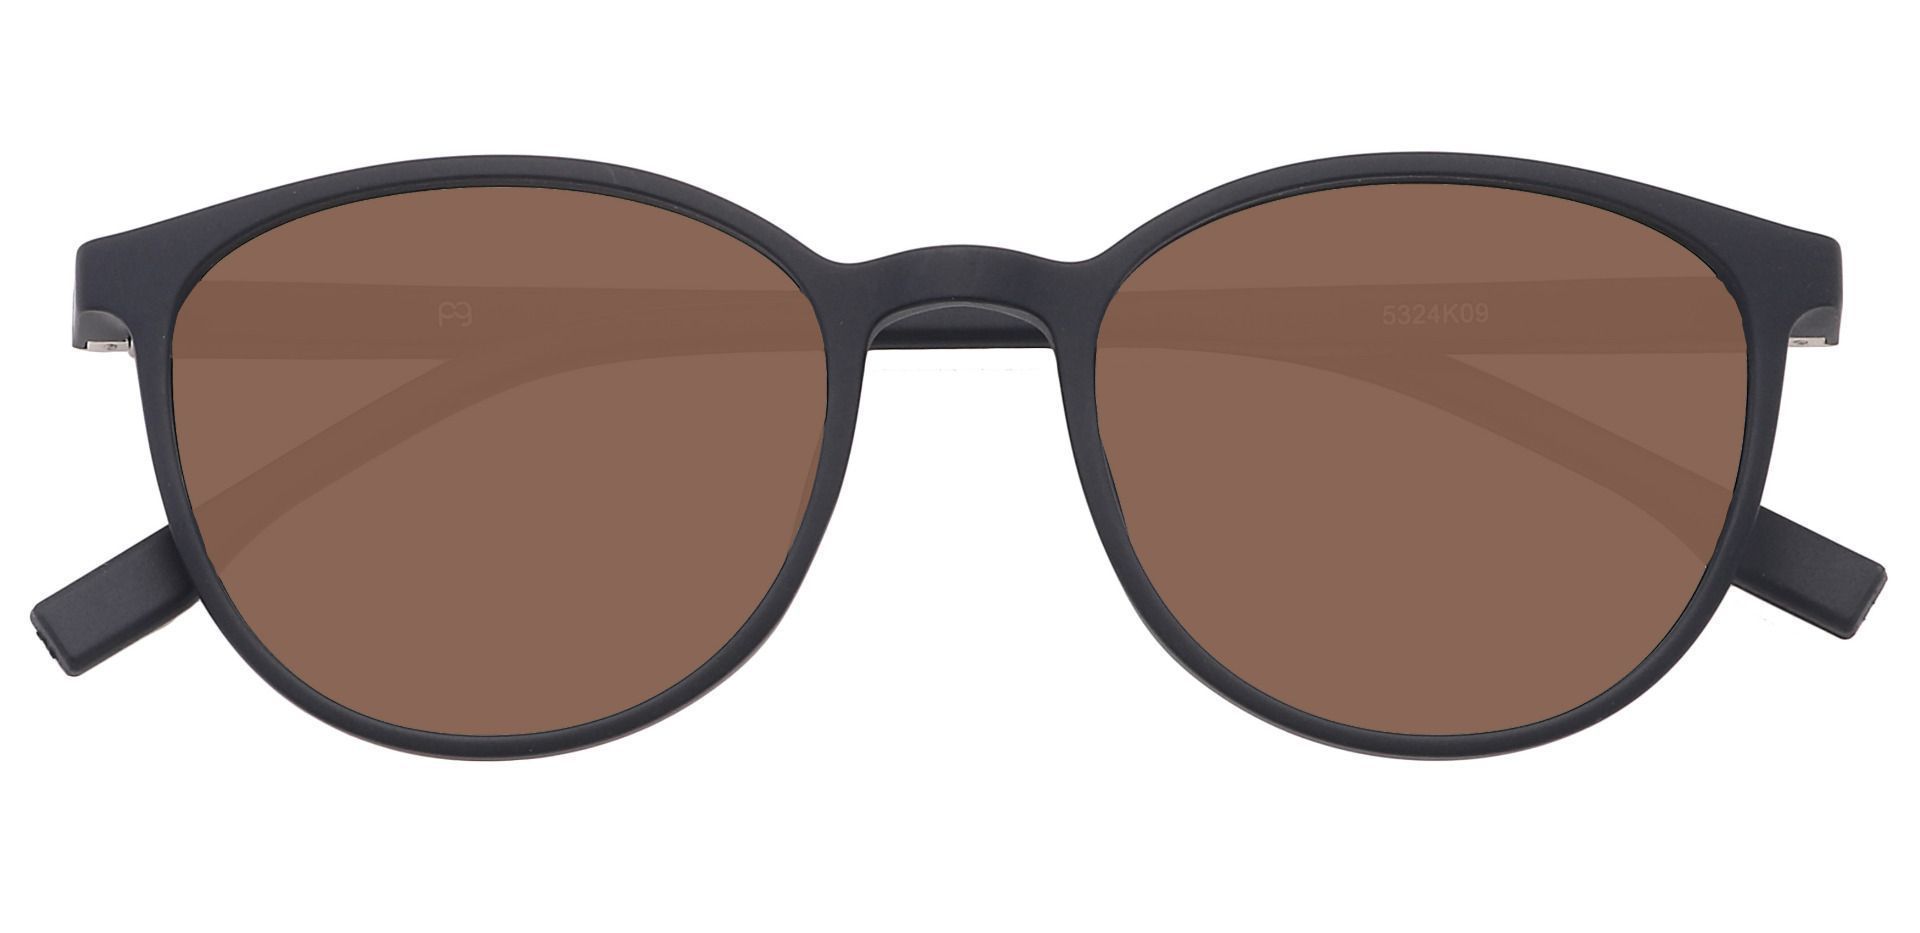 Bay Round Progressive Sunglasses - Black Frame With Brown Lenses